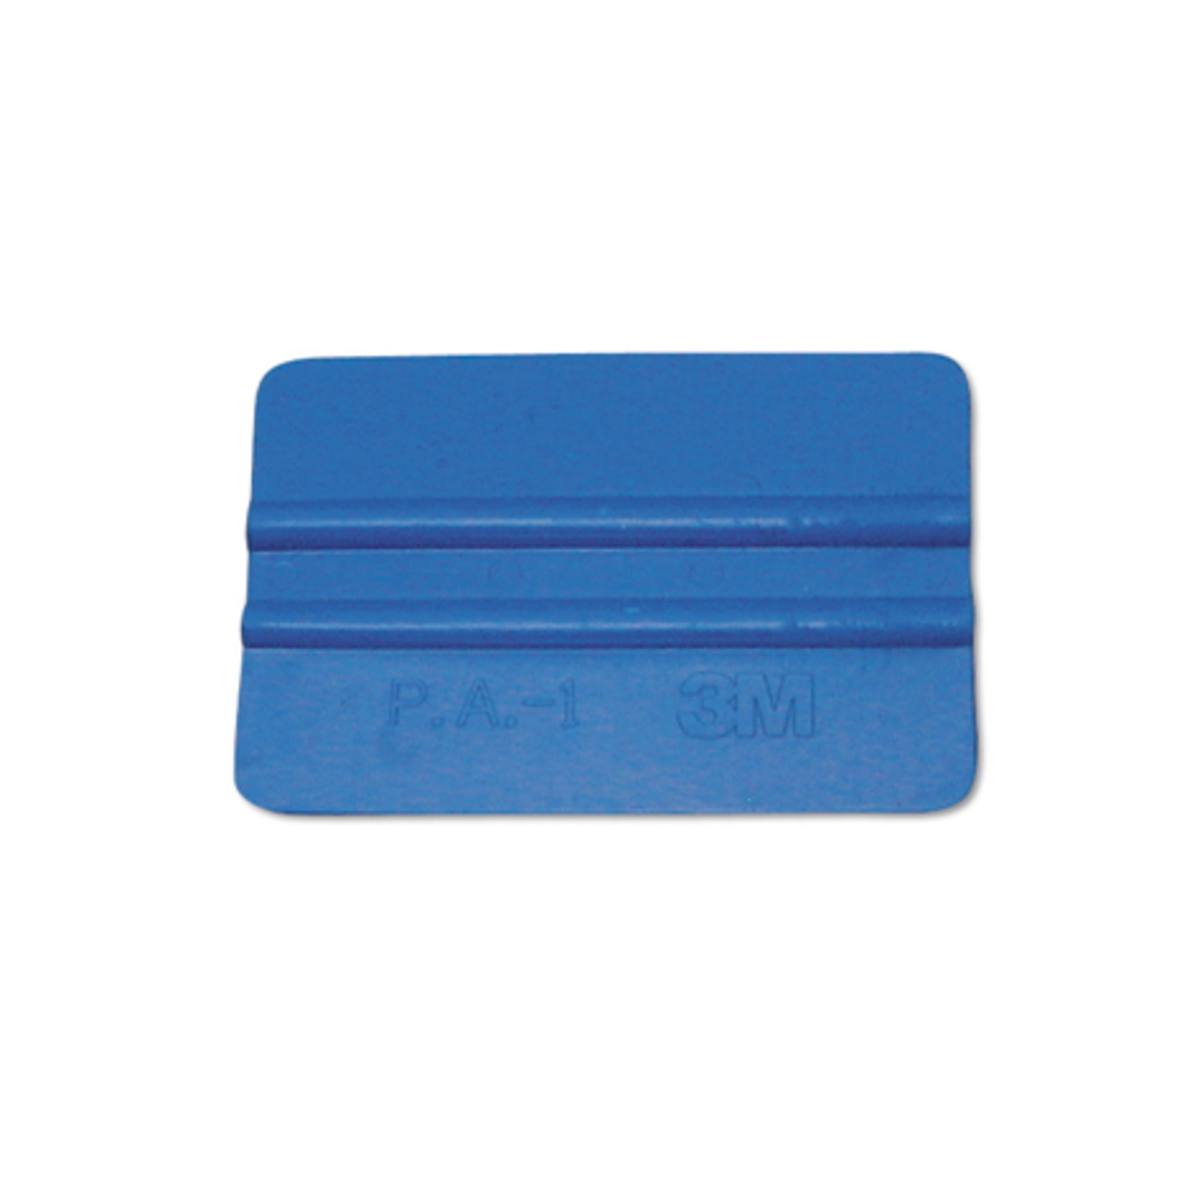 3M plastic squeegee, dark blue (low hardness) 100mmx70mm